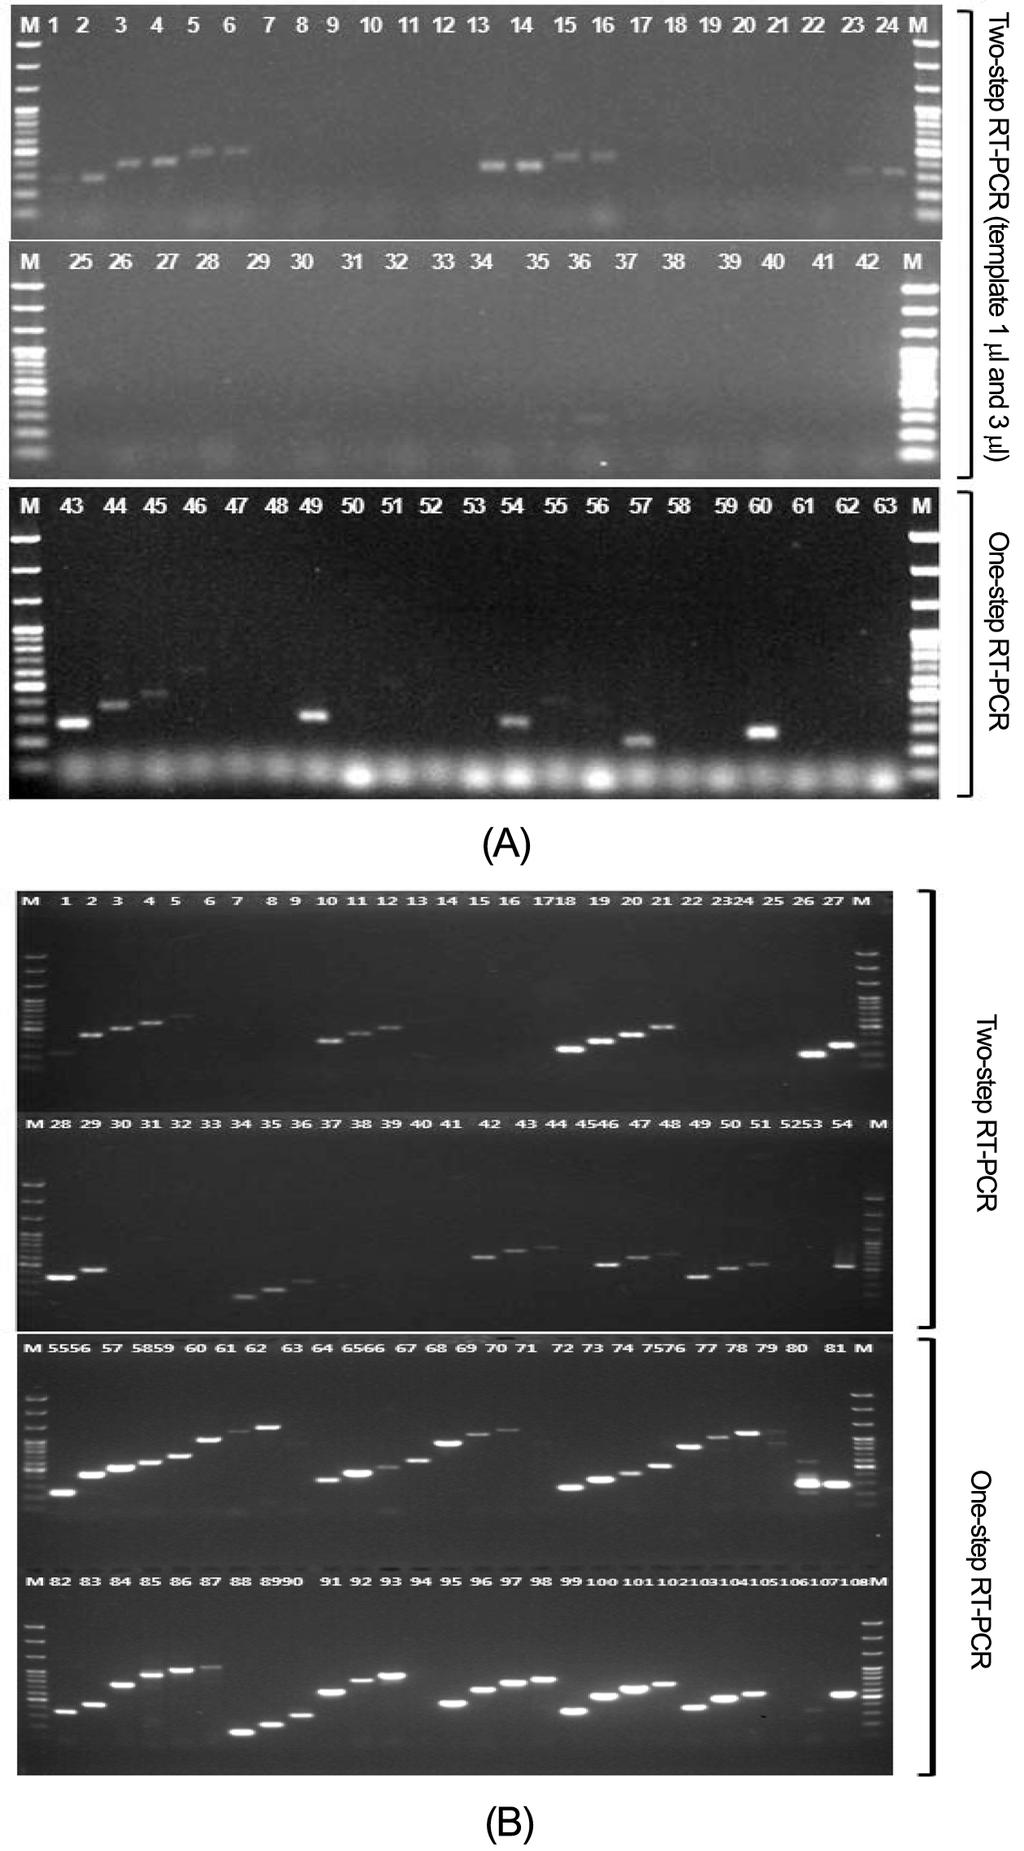 RT-PCR 에의한카네이션괴저바이러스와카네이션둥근반점바이러스정밀진단 39 뢰하였으며 (Bioneer, Korea), 분석된염기서열에서 primer binding site를확인하였다.